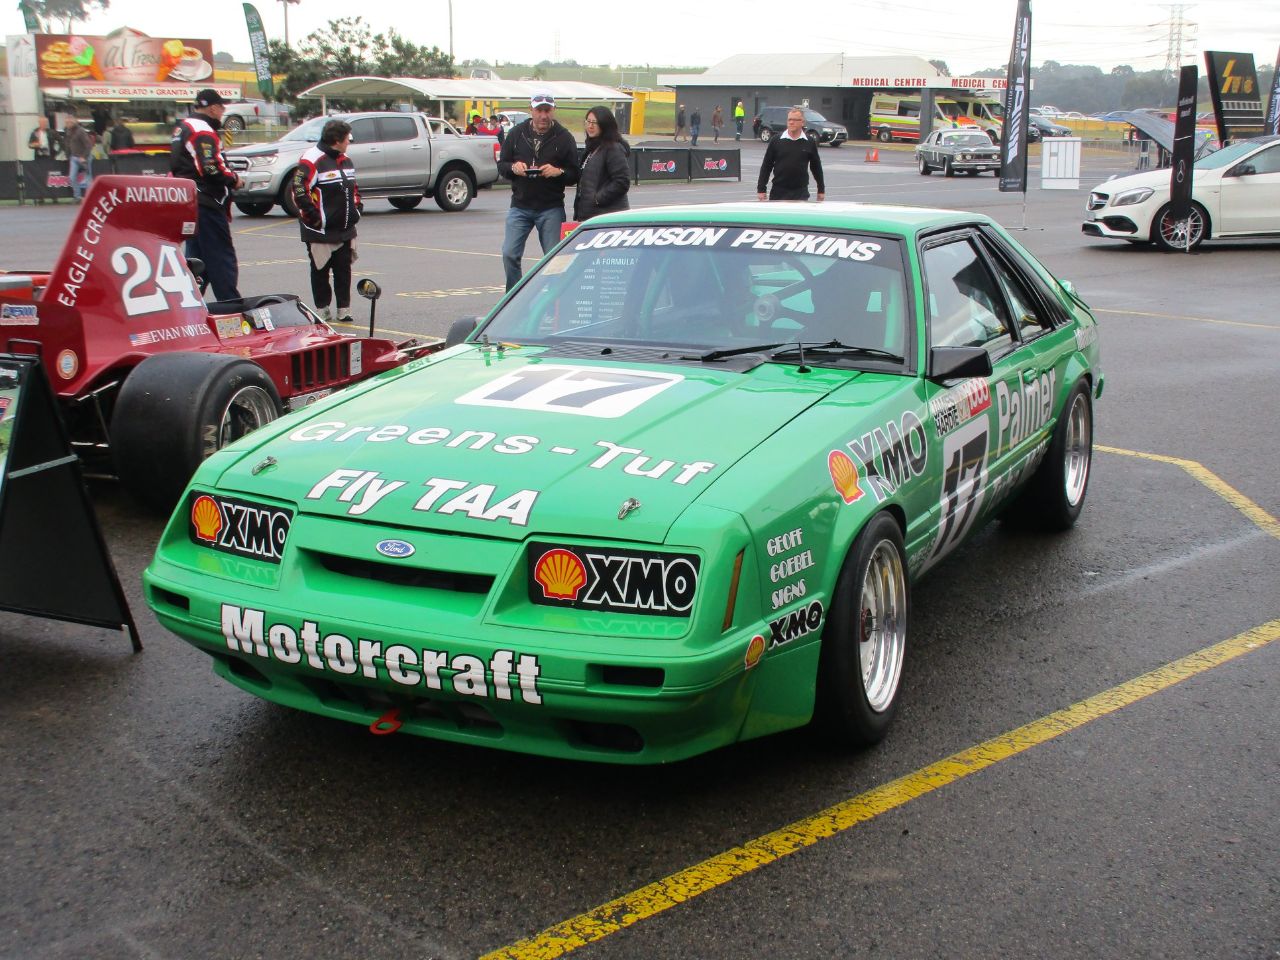 DJR 17 Greens Tuff Mustang raced in 1980s